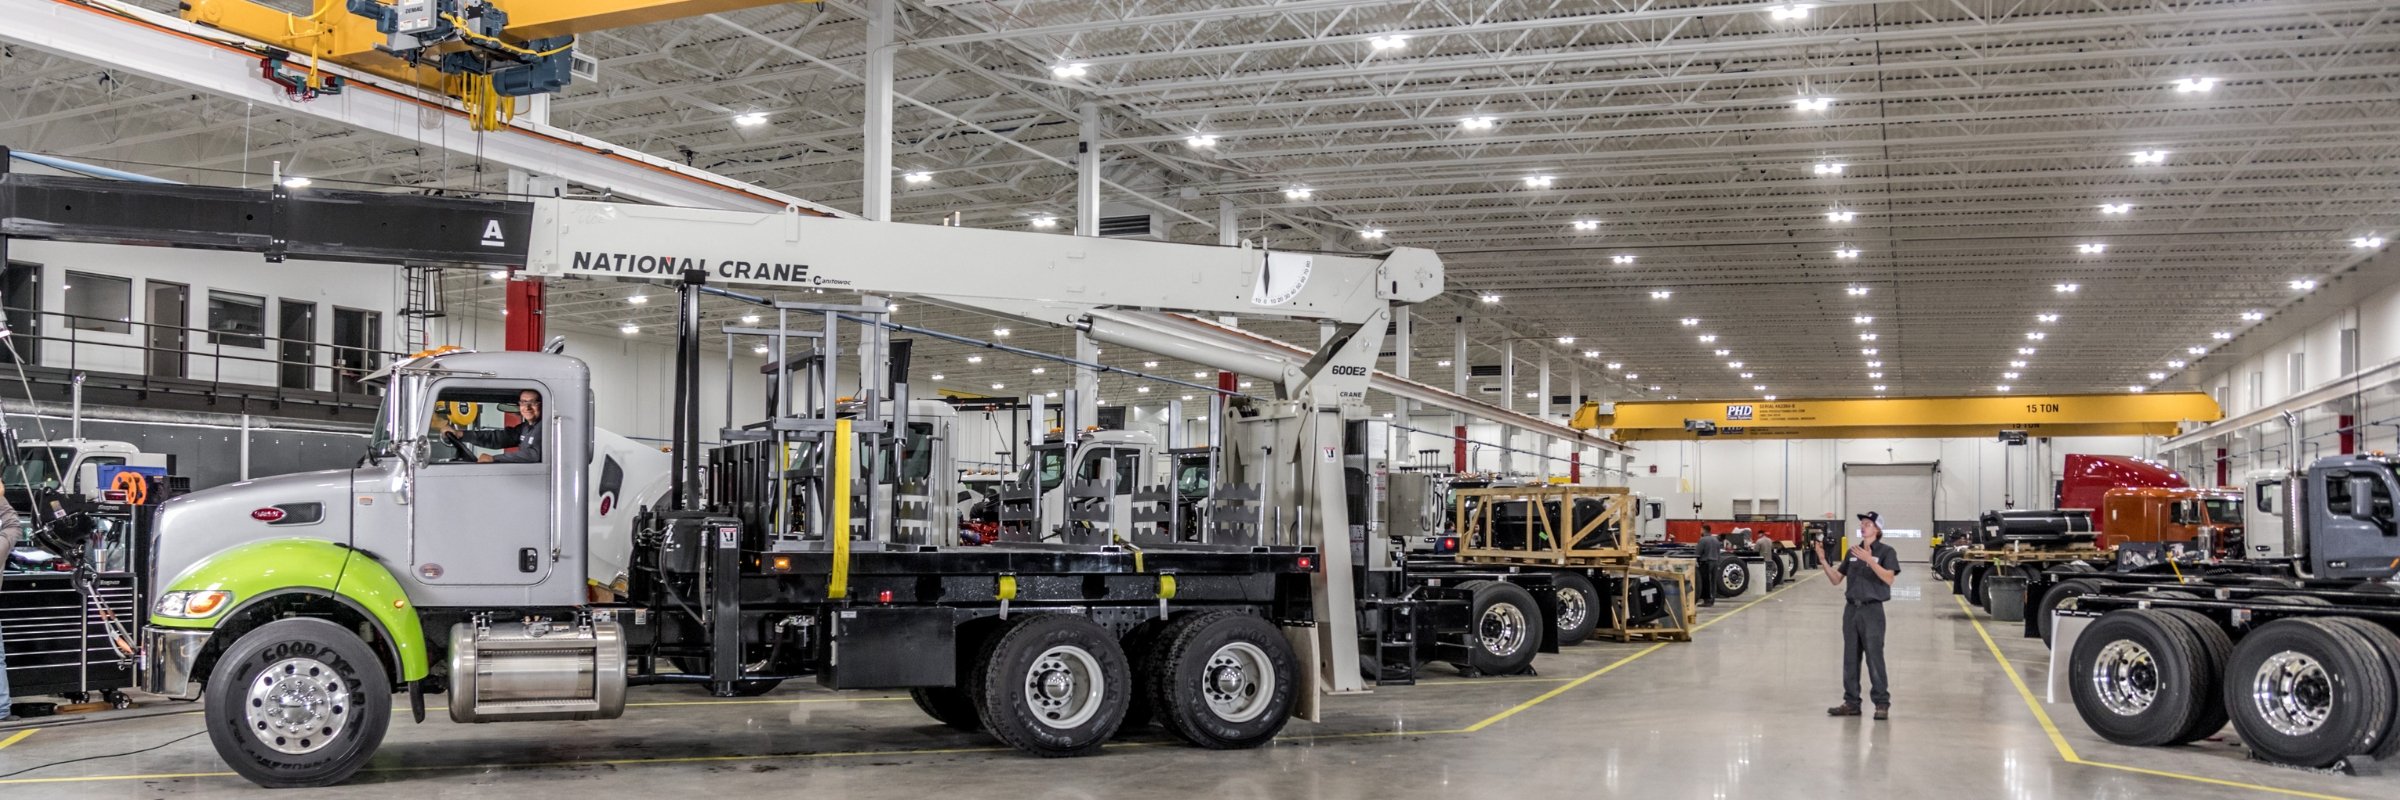 Custom Vehicle Solutions employees installing crane on truck